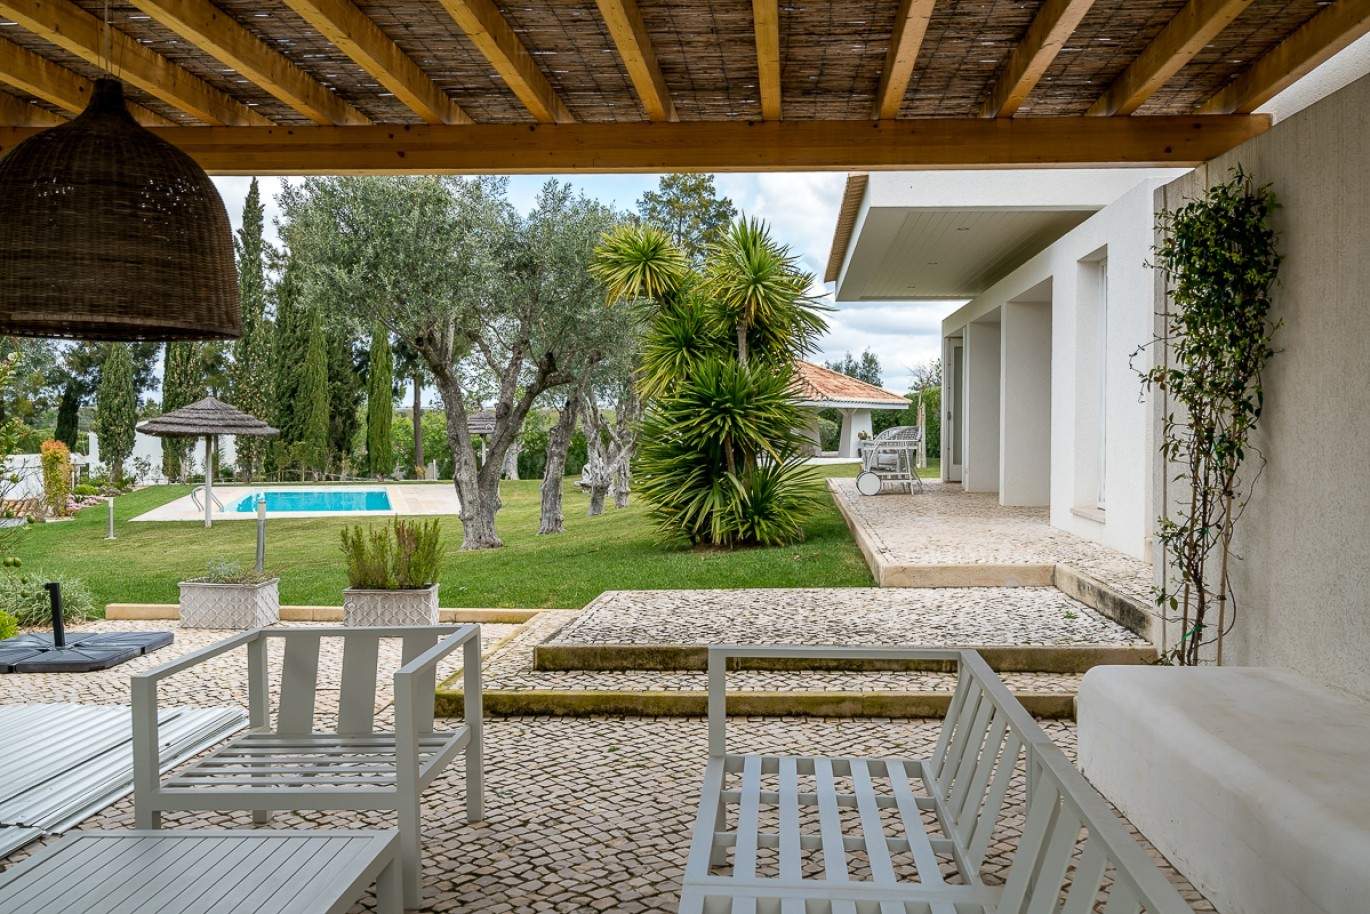 Venda de moradia de luxo com piscina, Silves, Algarve_77340